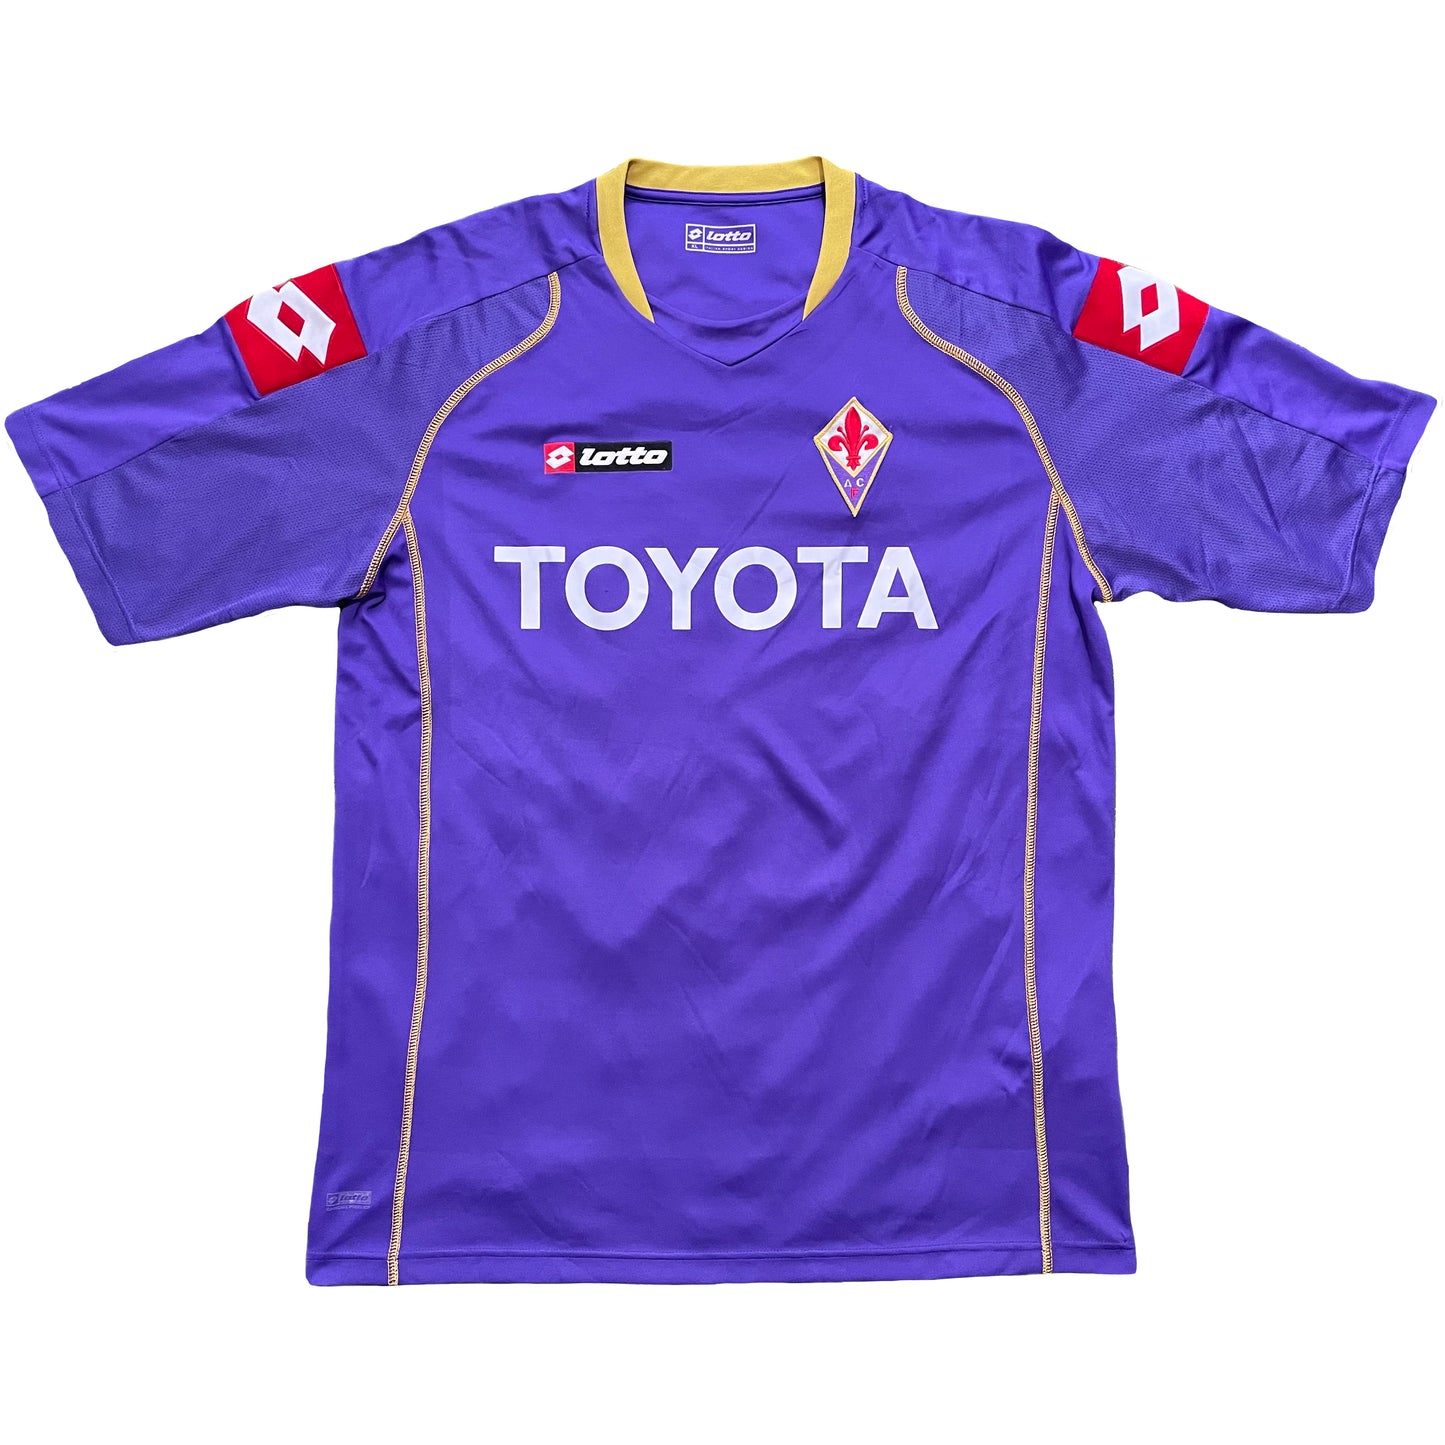 Fiorentina home #11 Gilardino (XL) Football and Shirts